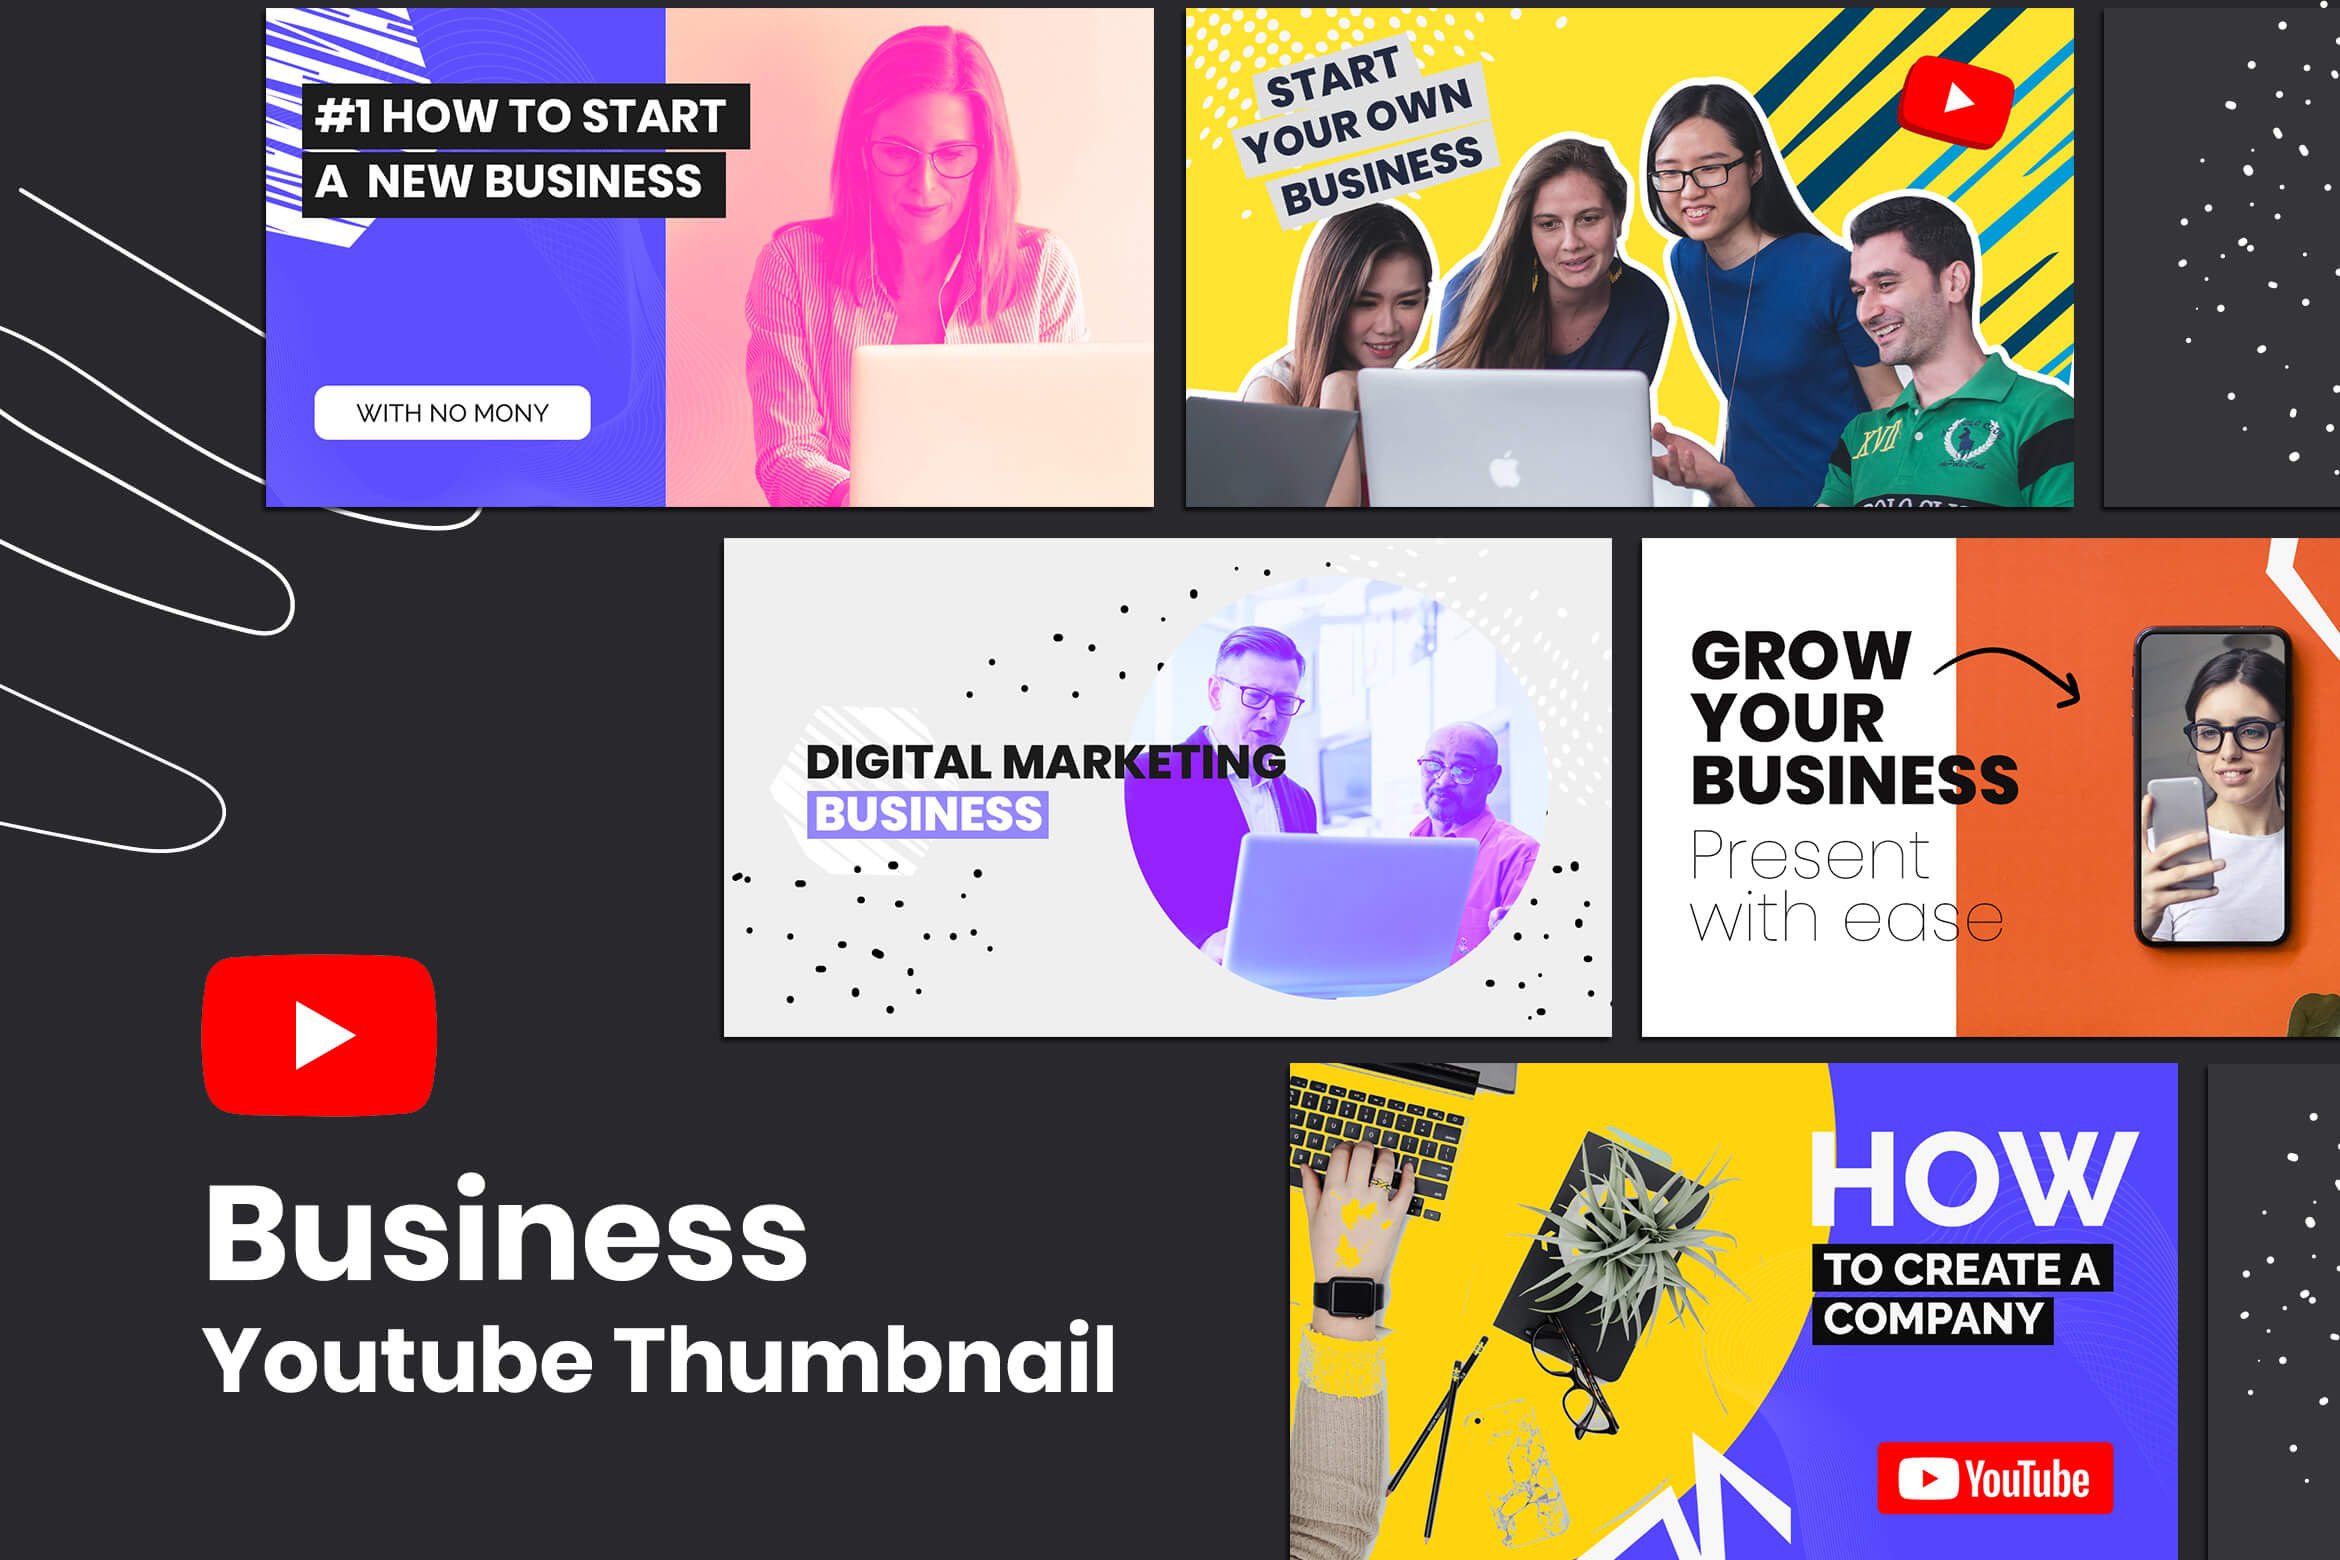 Business Youtube Thumbnails